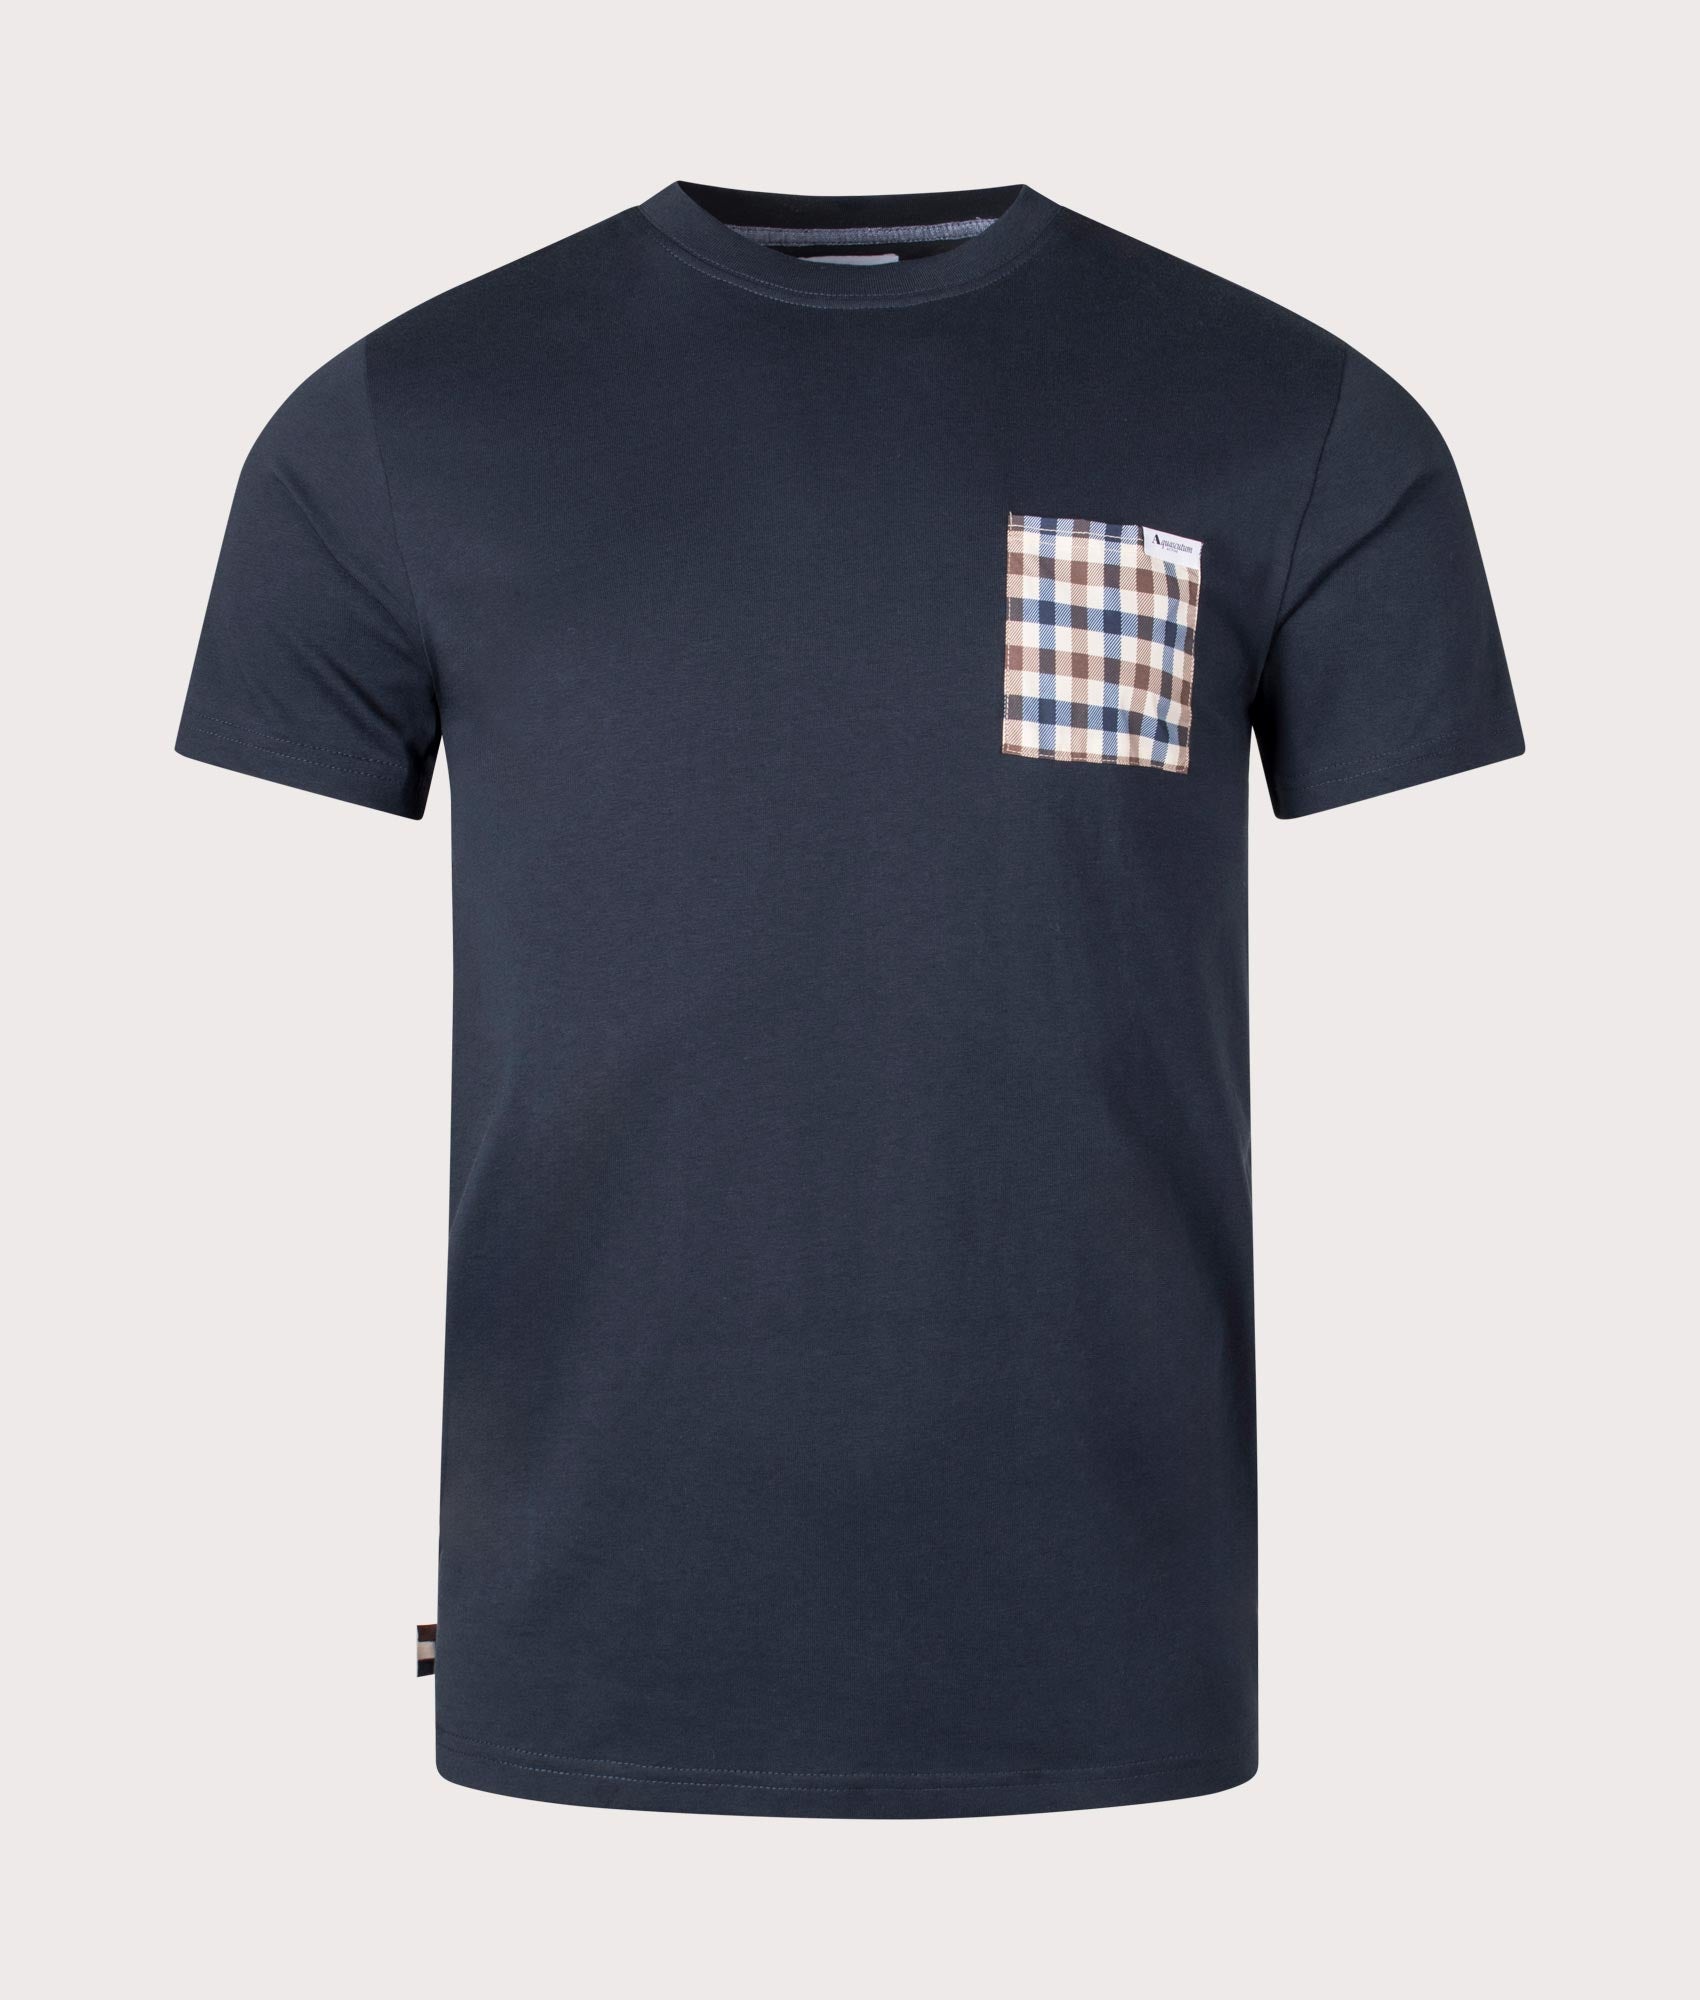 Aquascutum Mens Active Club Check Pocket T-Shirt - Colour: 11 Navy - Size: Large